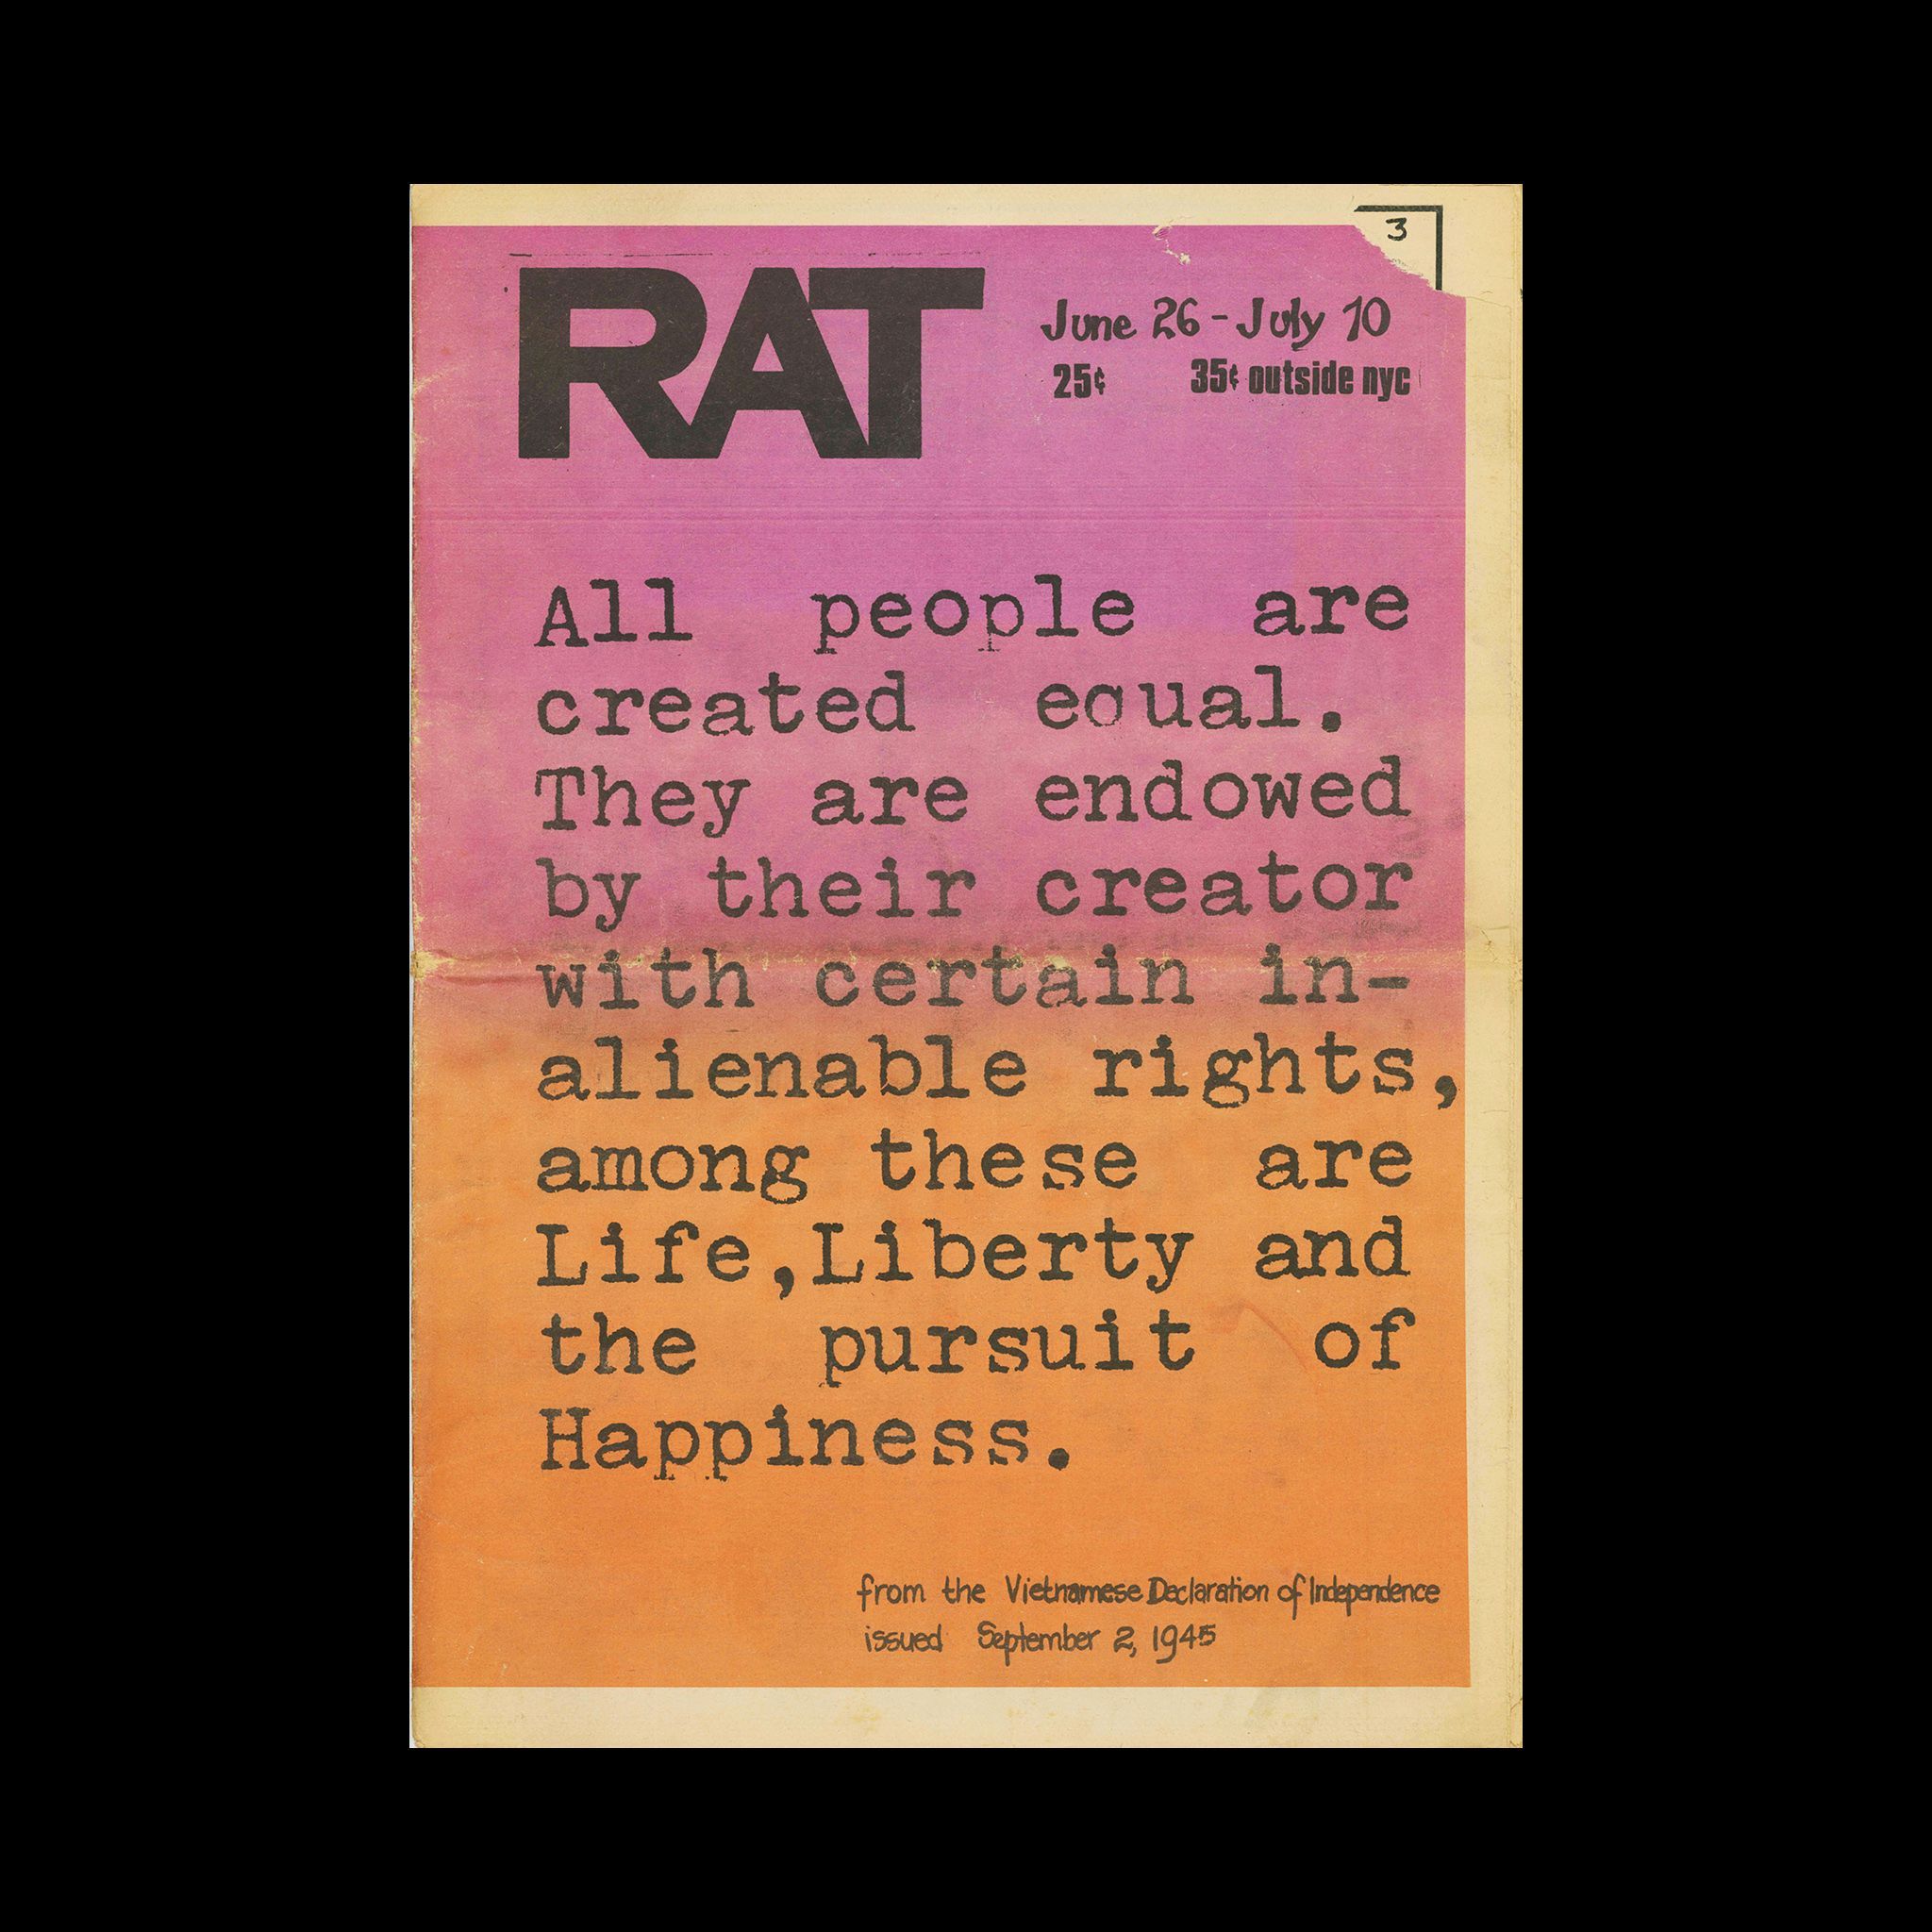 RAT, June 26 - July 10, 1970